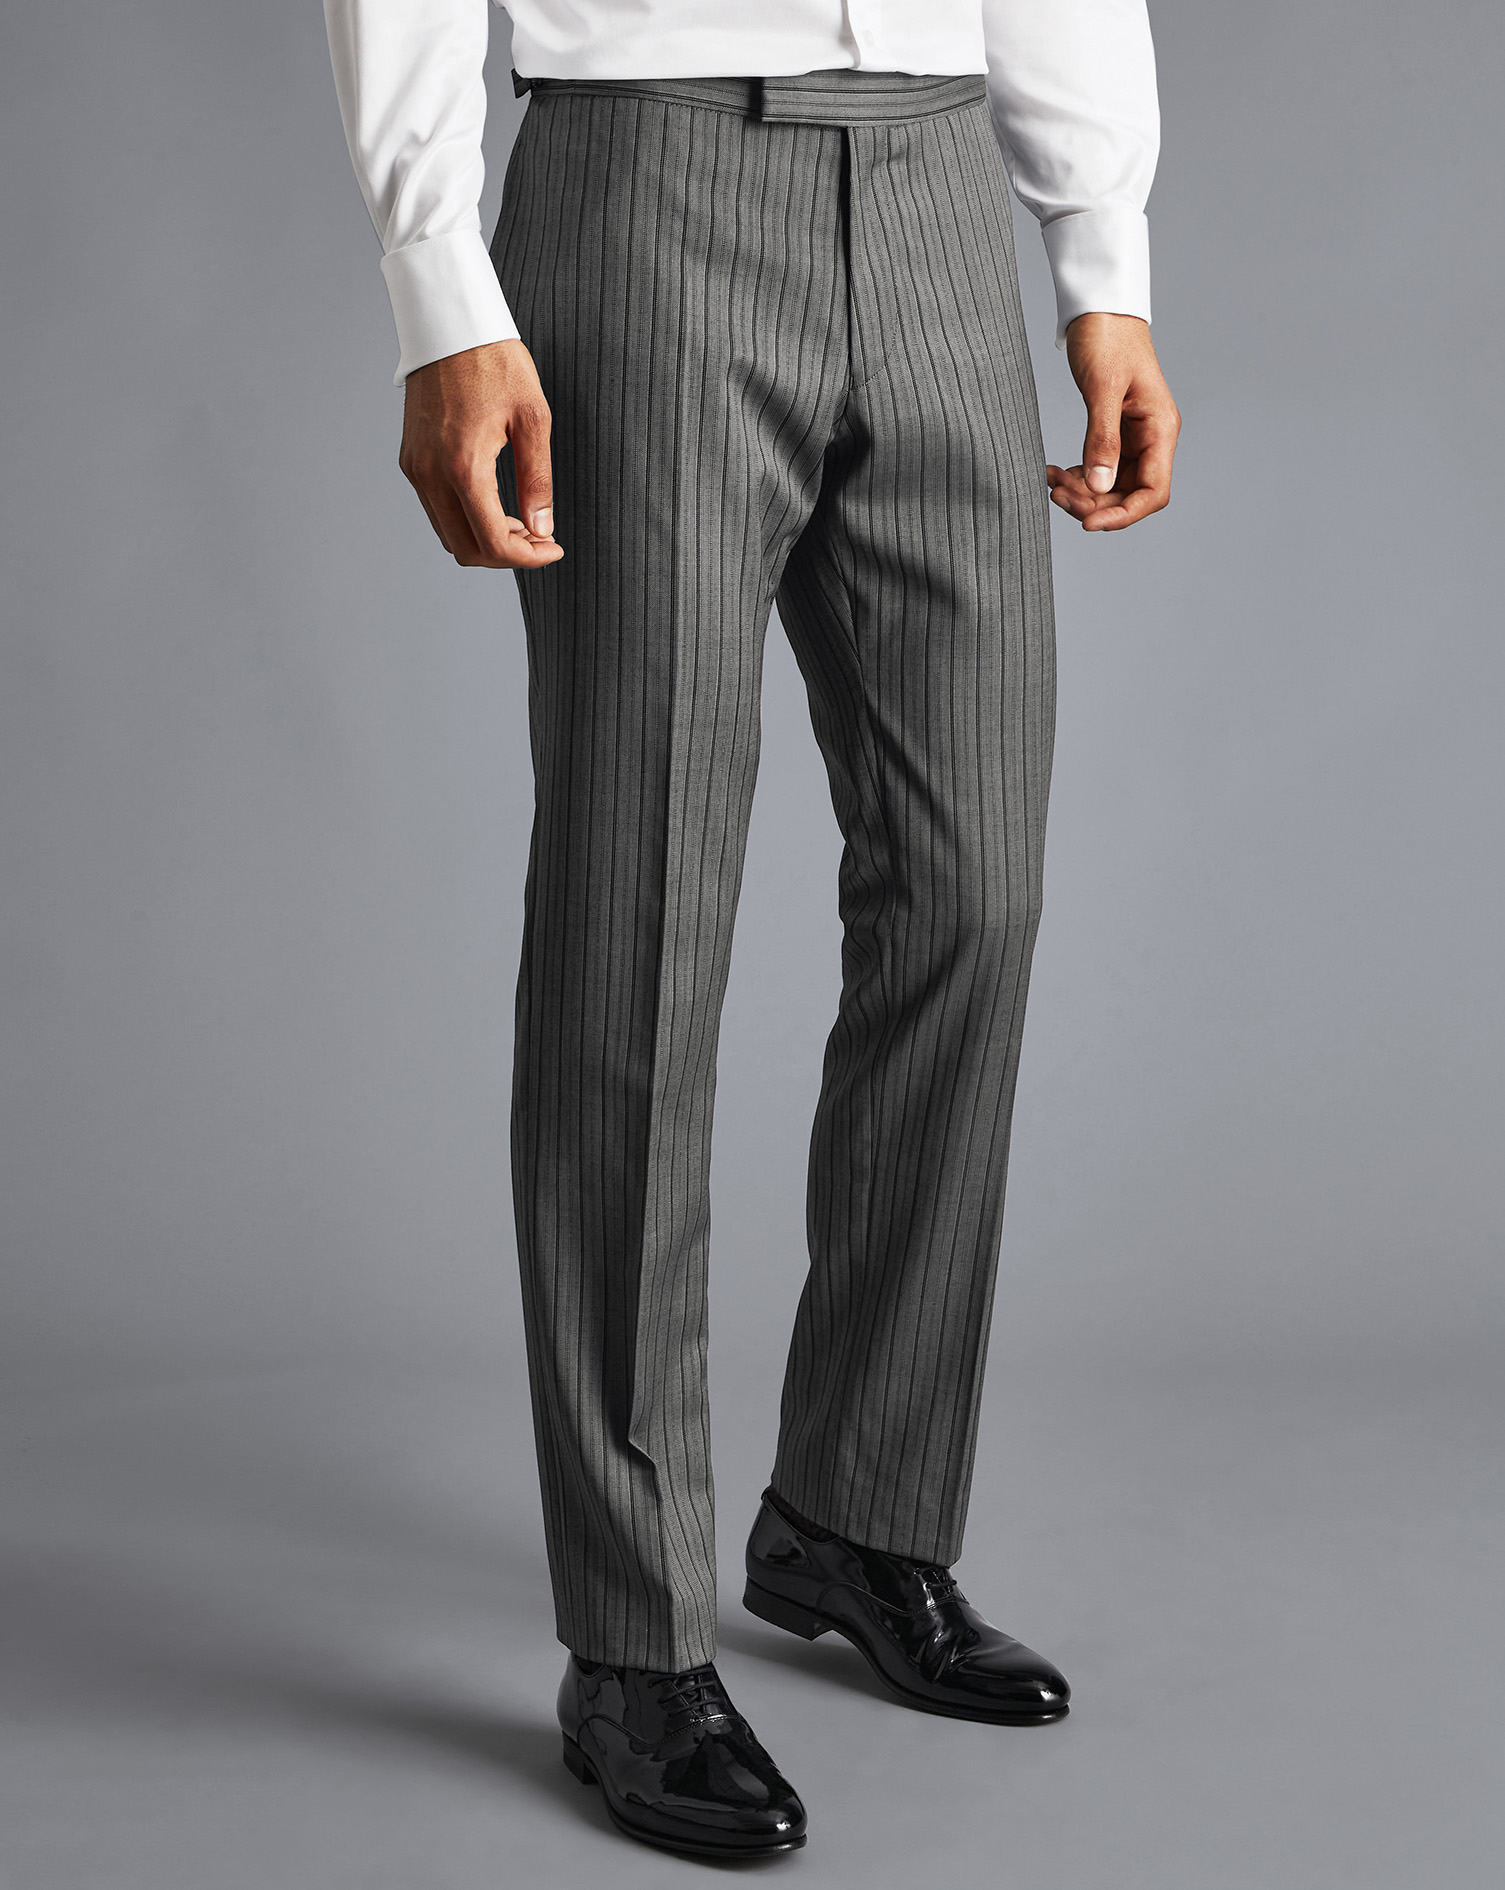 INDIGO NATION Slim Fit Men Grey Trousers  Buy INDIGO NATION Slim Fit Men  Grey Trousers Online at Best Prices in India  Flipkartcom